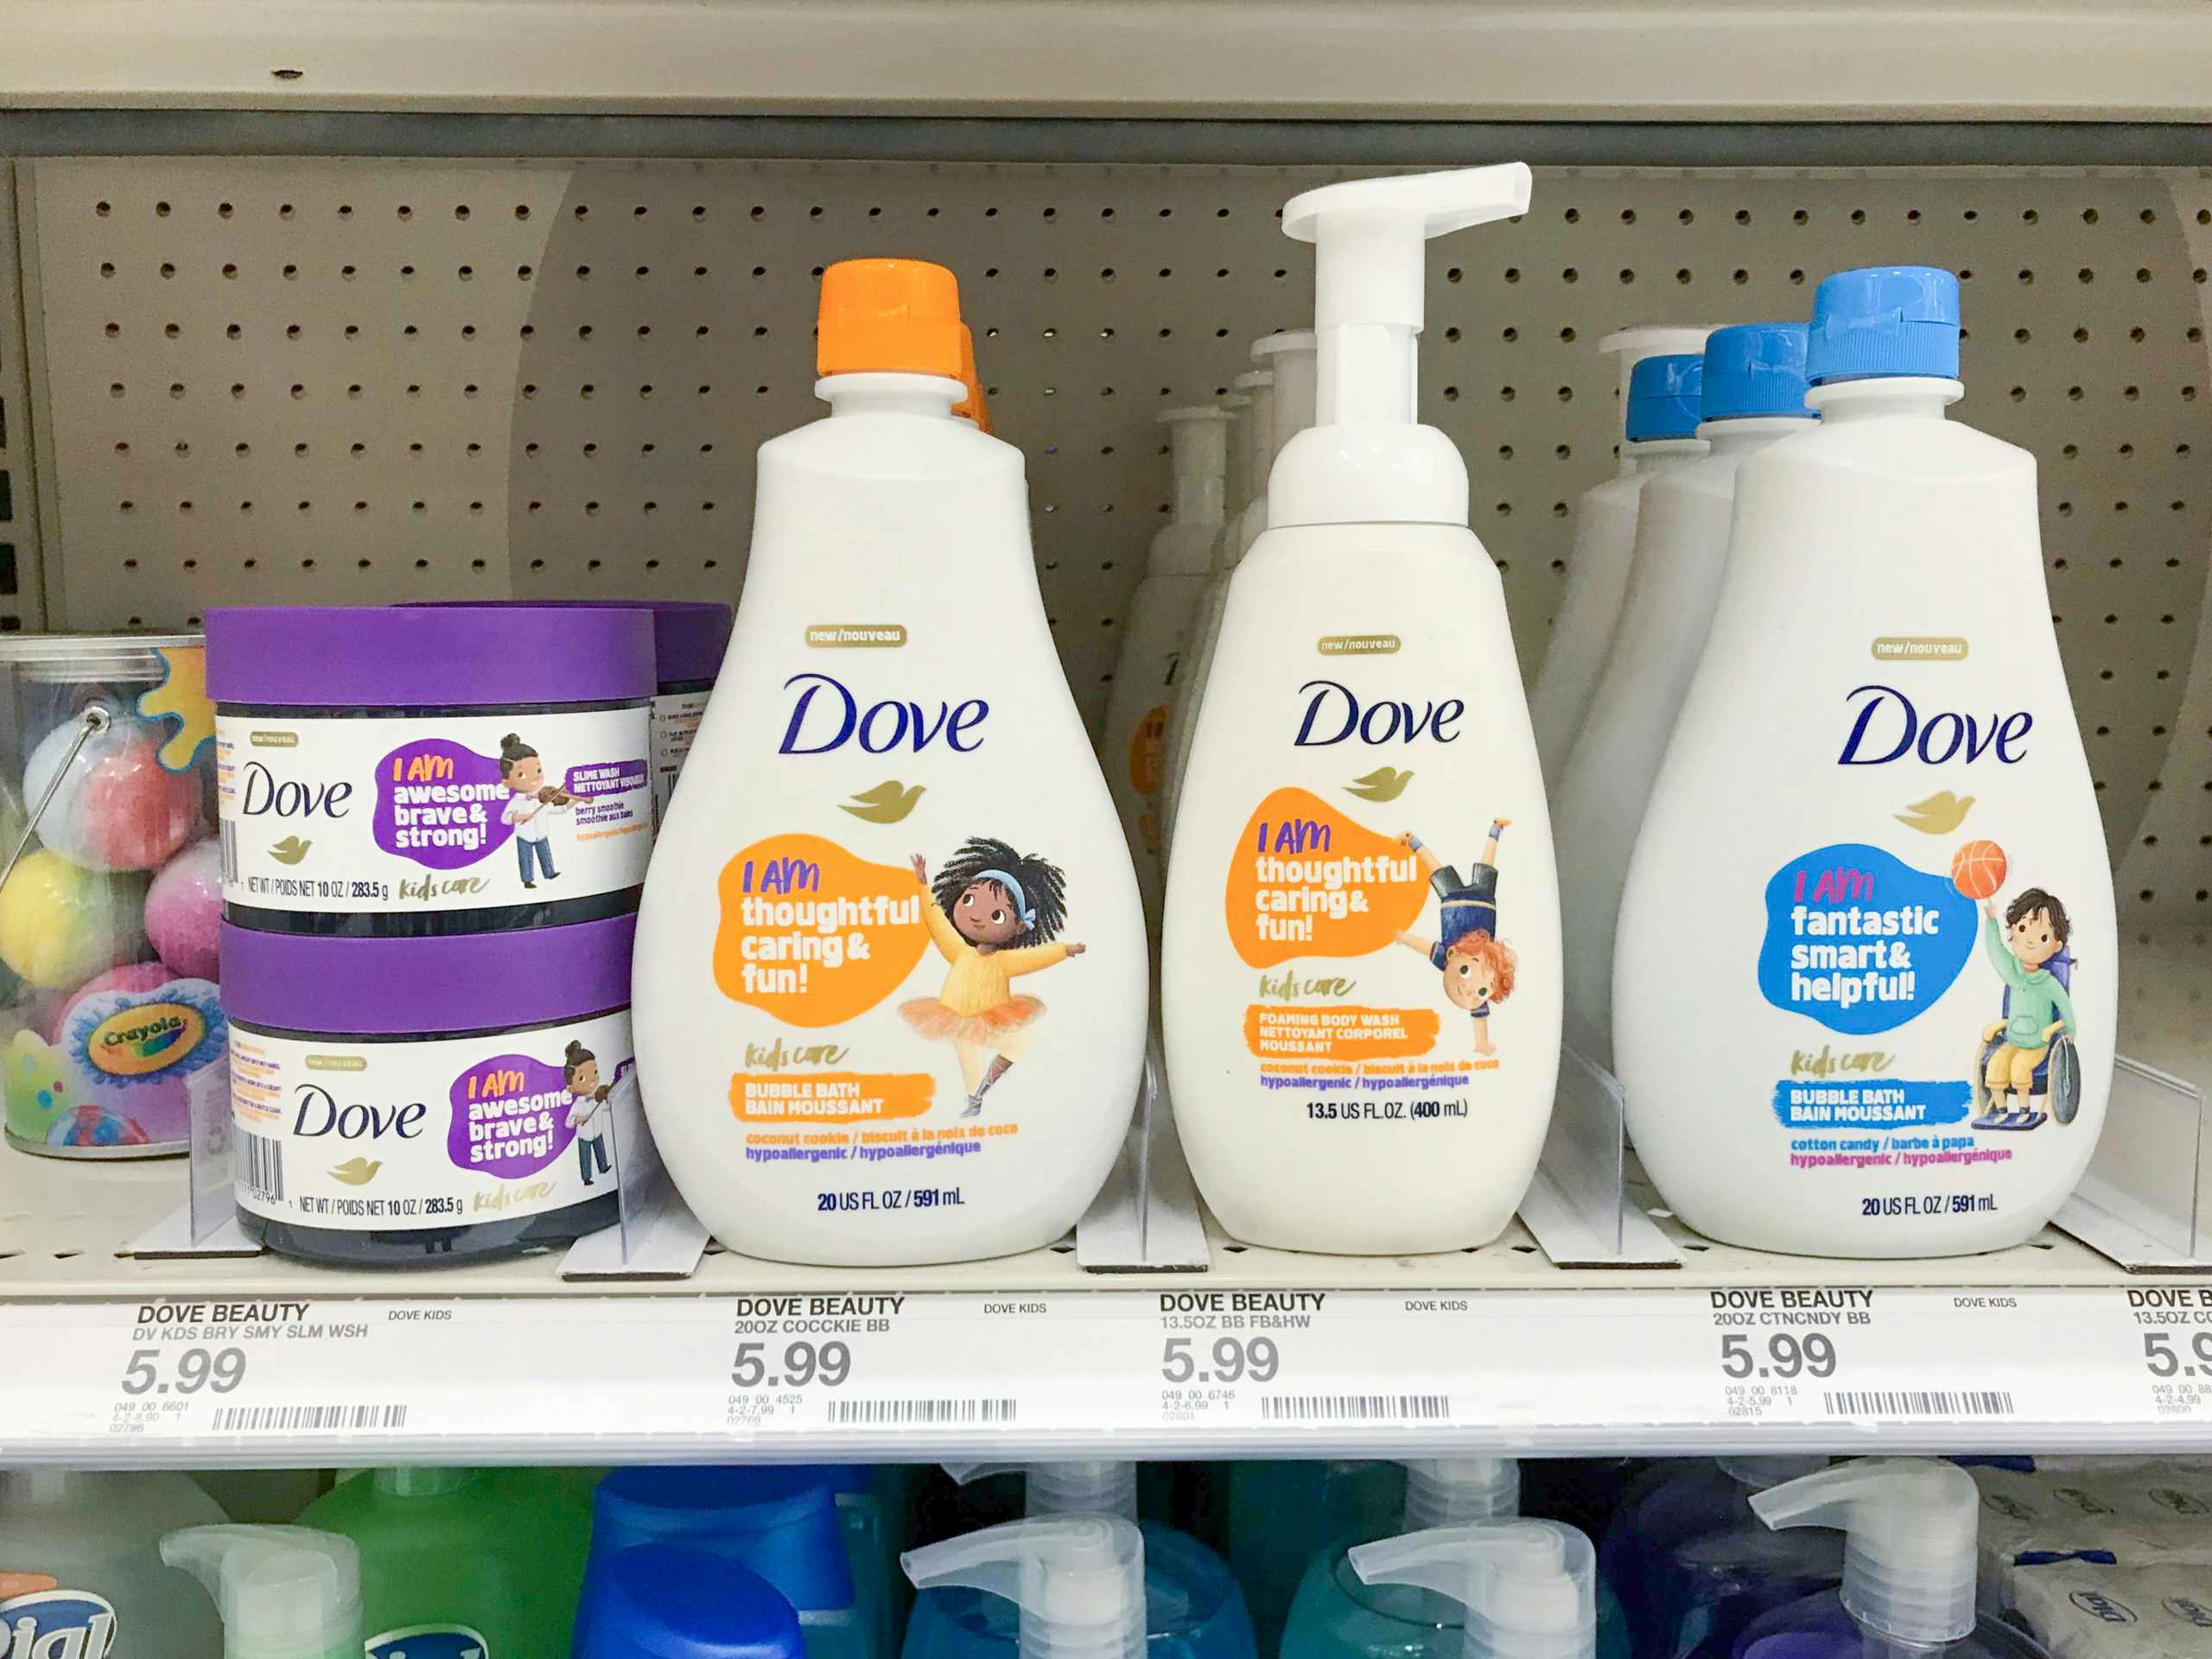 bottles of Dove Kids body wash at Target on the shelf